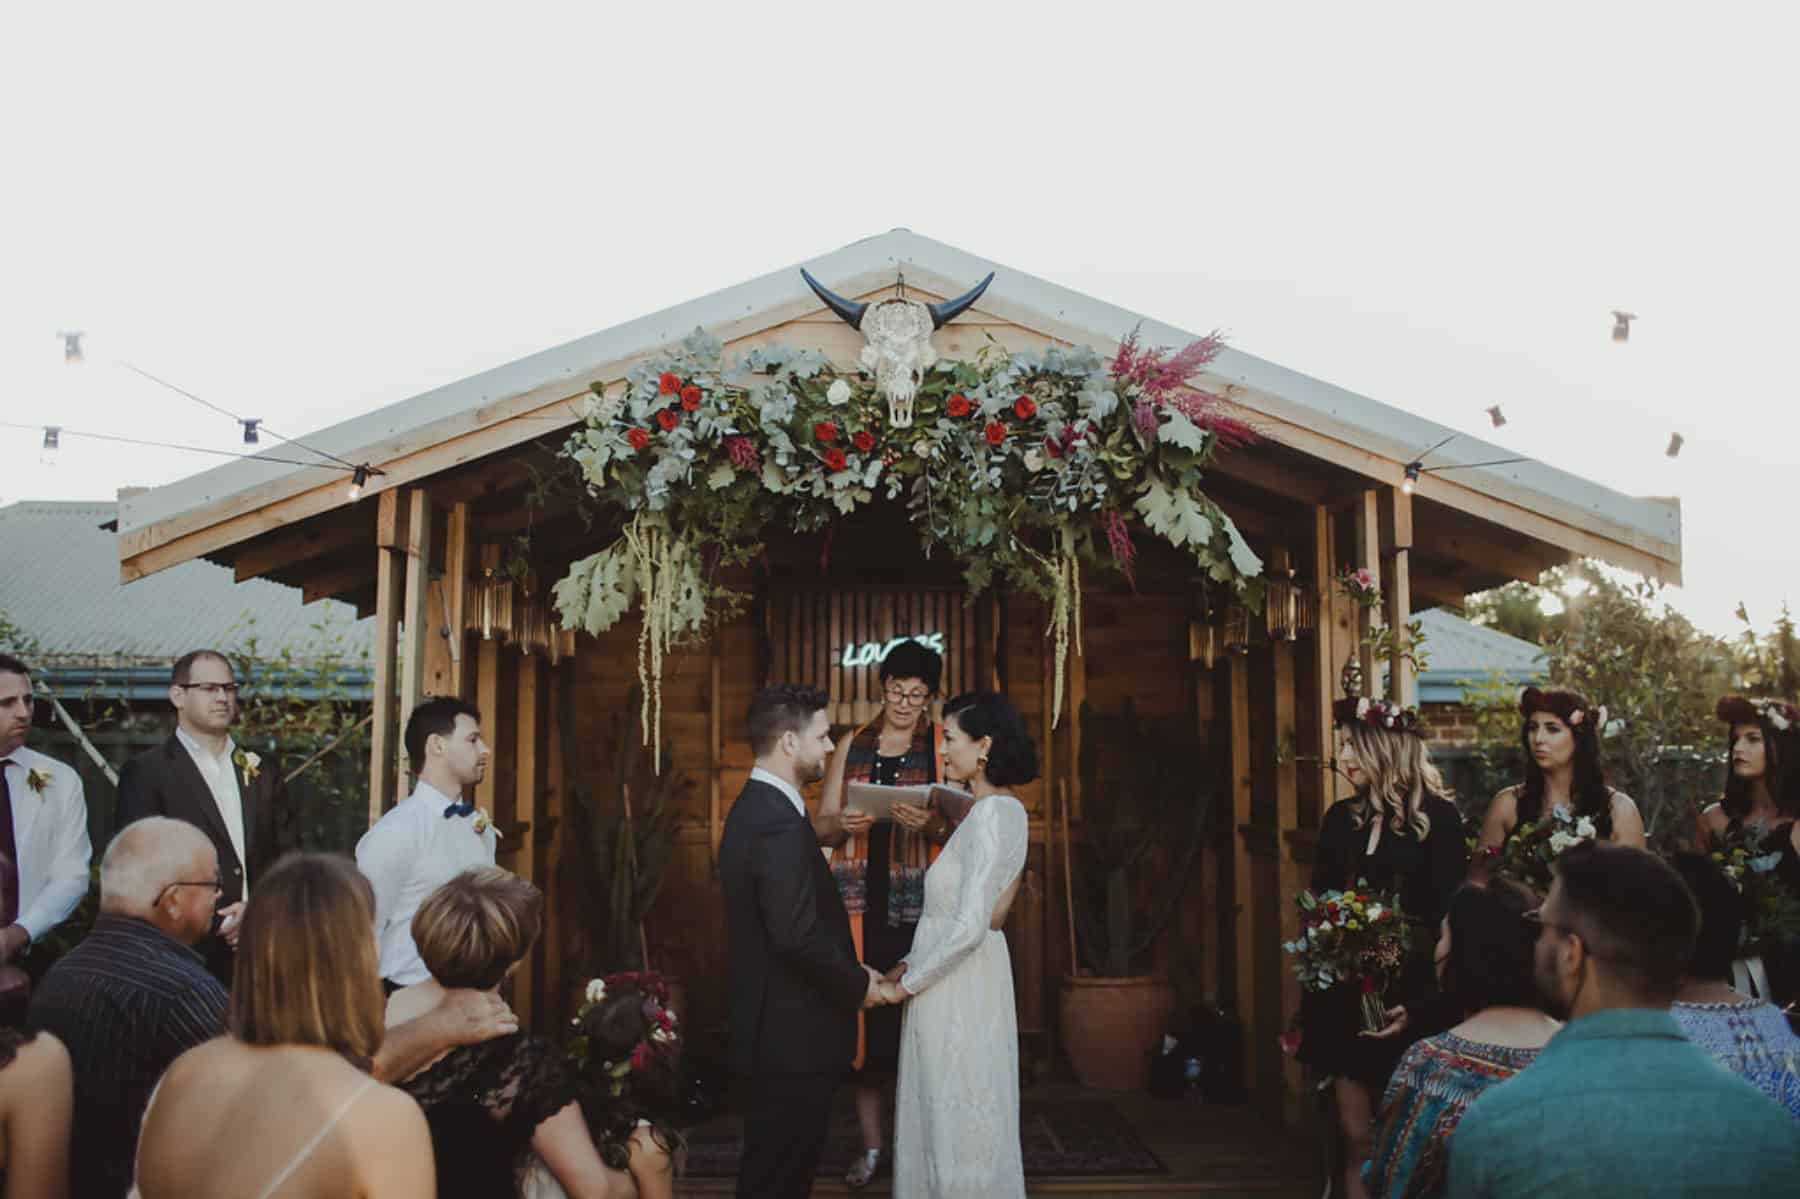 Top 10 weddings of 2017 | Pia & Dave’s Surprise Backyard Wedding